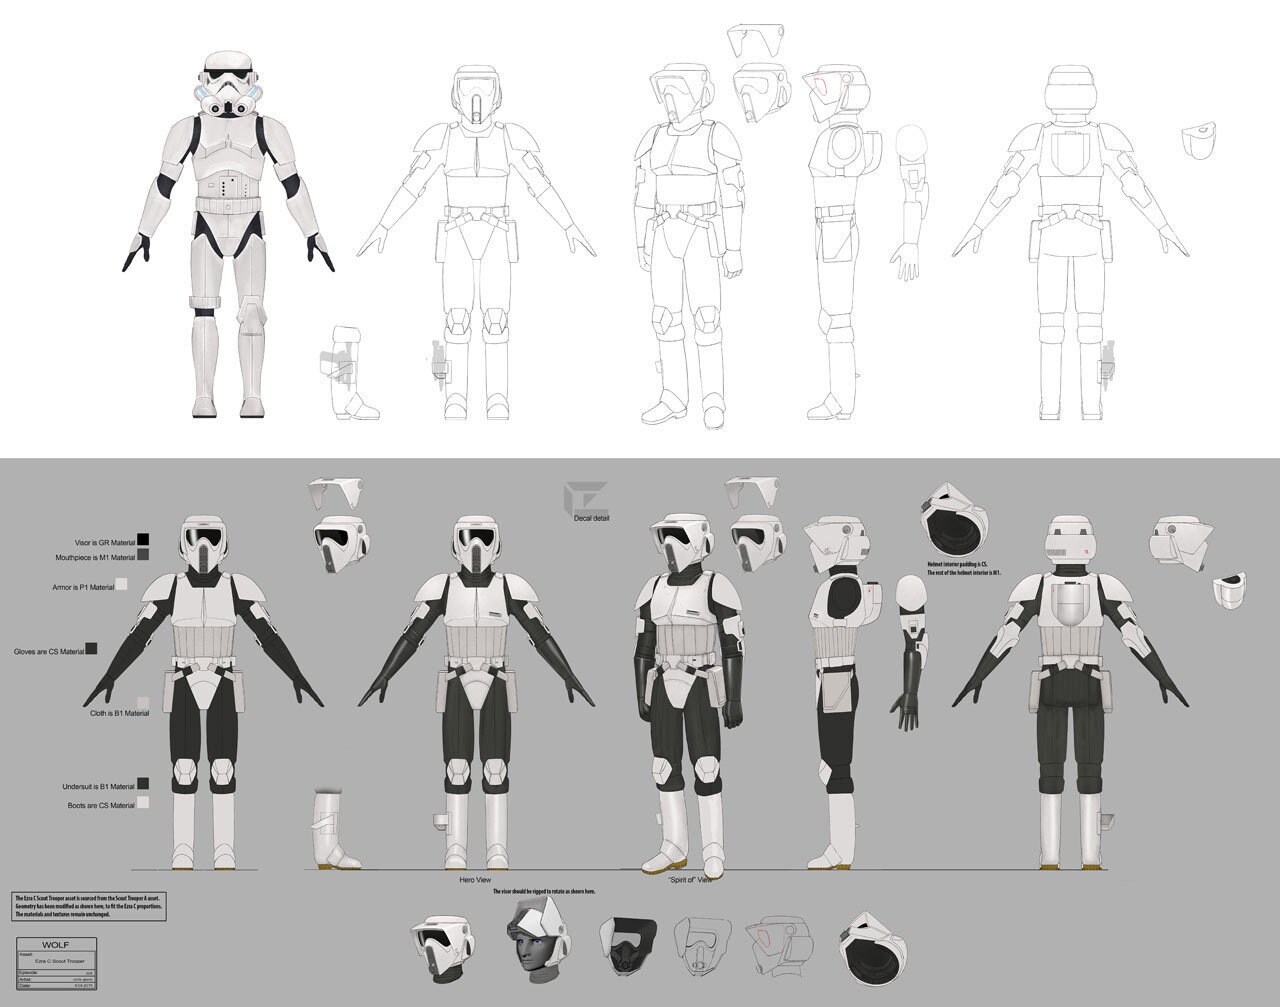 Ezra in scout trooper uniform full character illustration by Chris Glenn. 